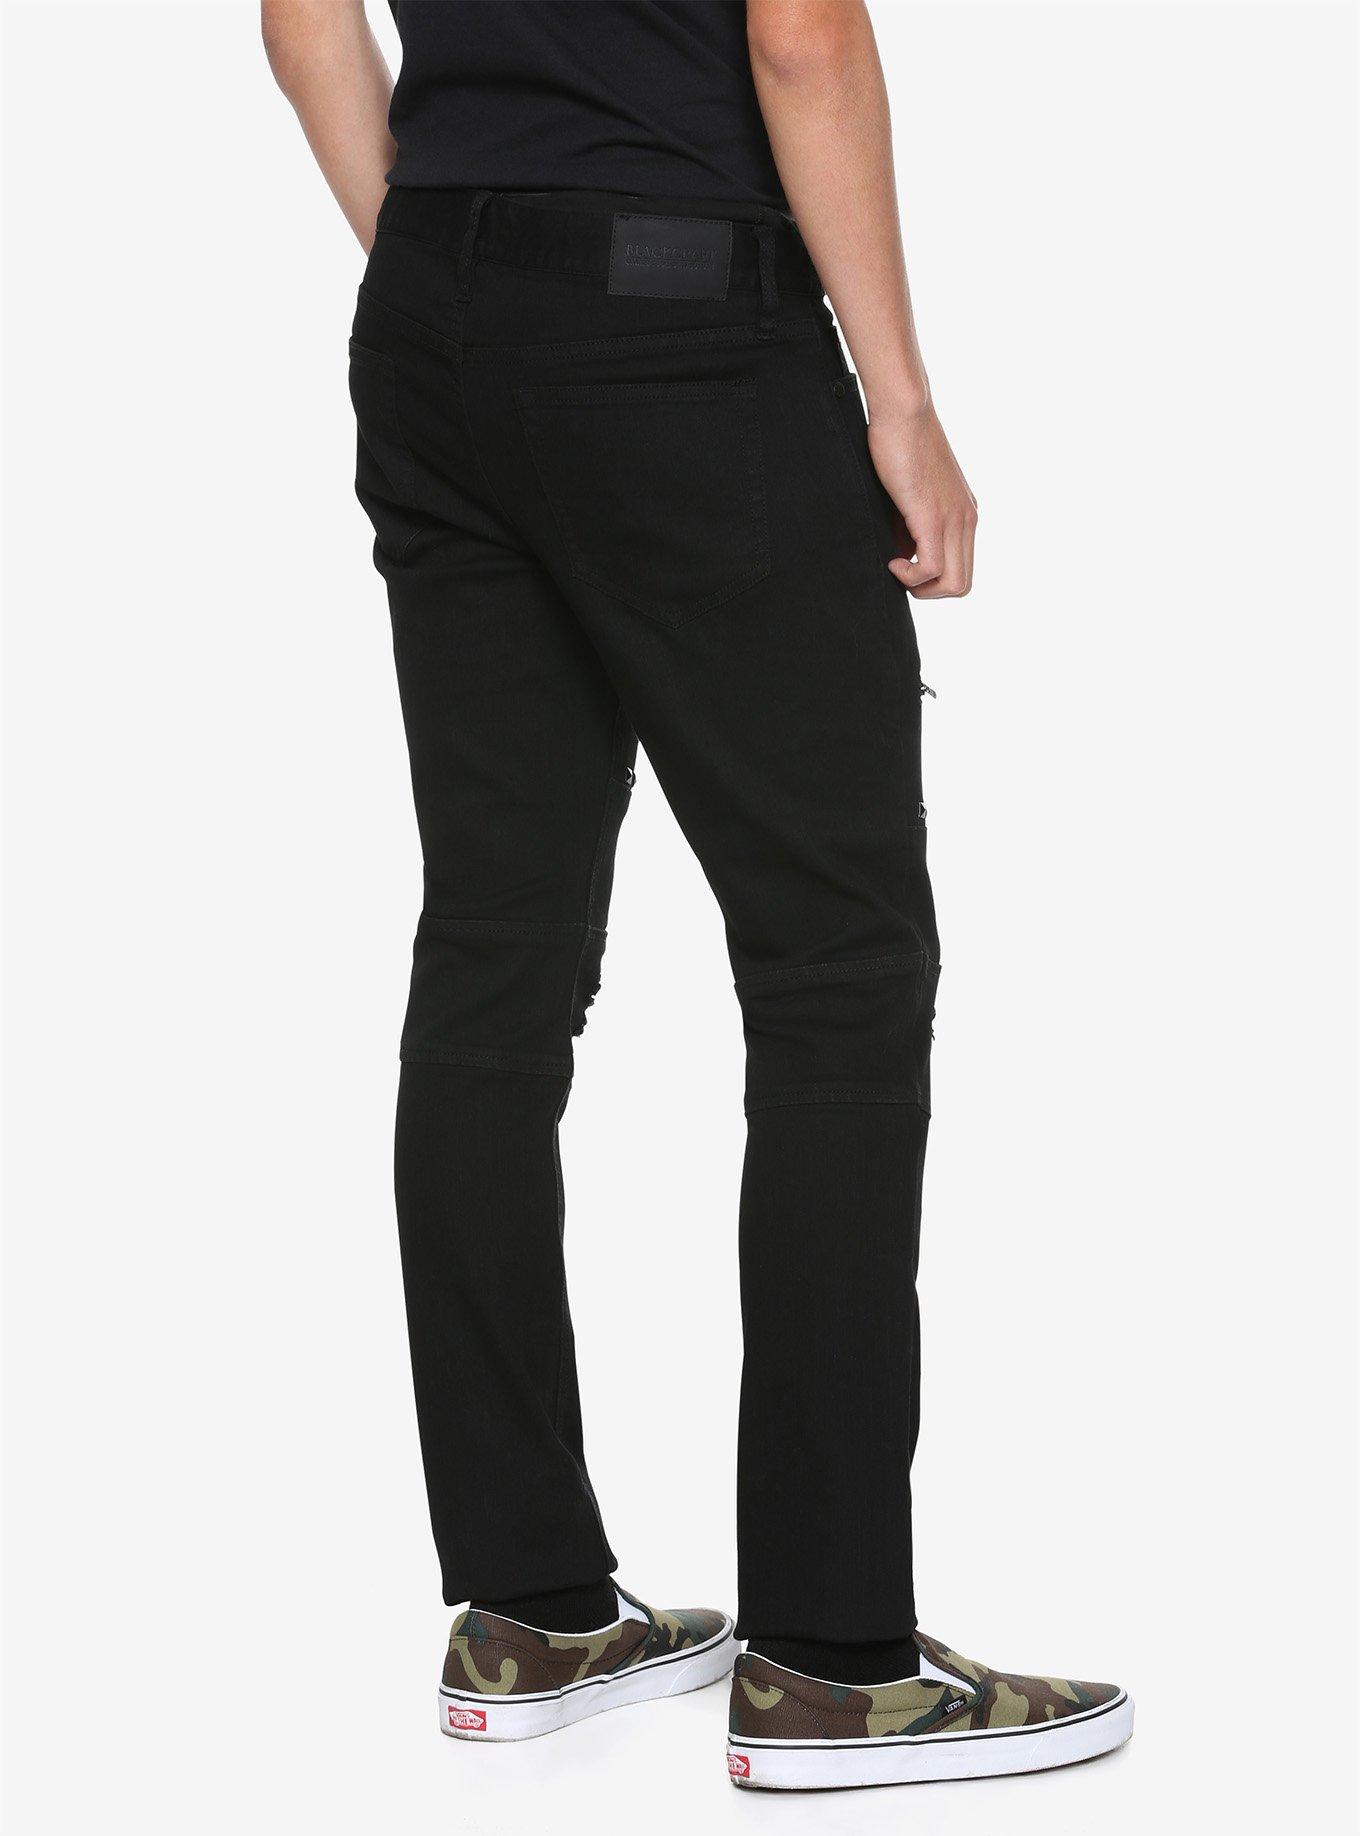 BlackCraft Black Pyramid Stud & Zipper Skinny Jeans, , alternate